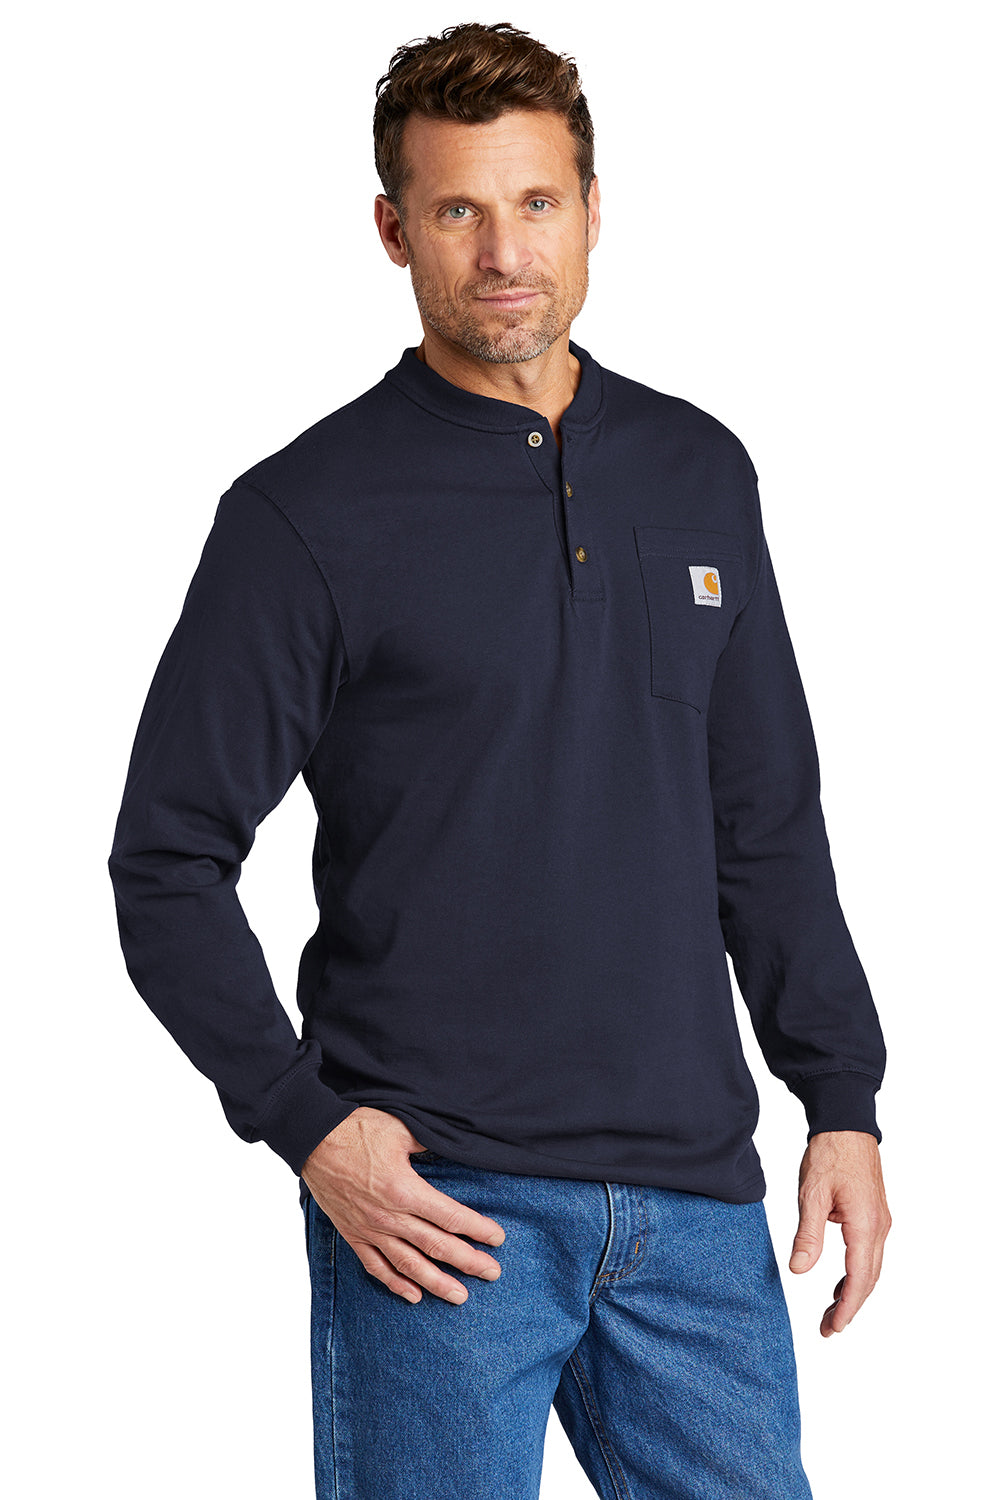 Carhartt CTK128 Mens Long Sleeve Henley T-Shirt w/ Pocket Navy Blue Model 3Q